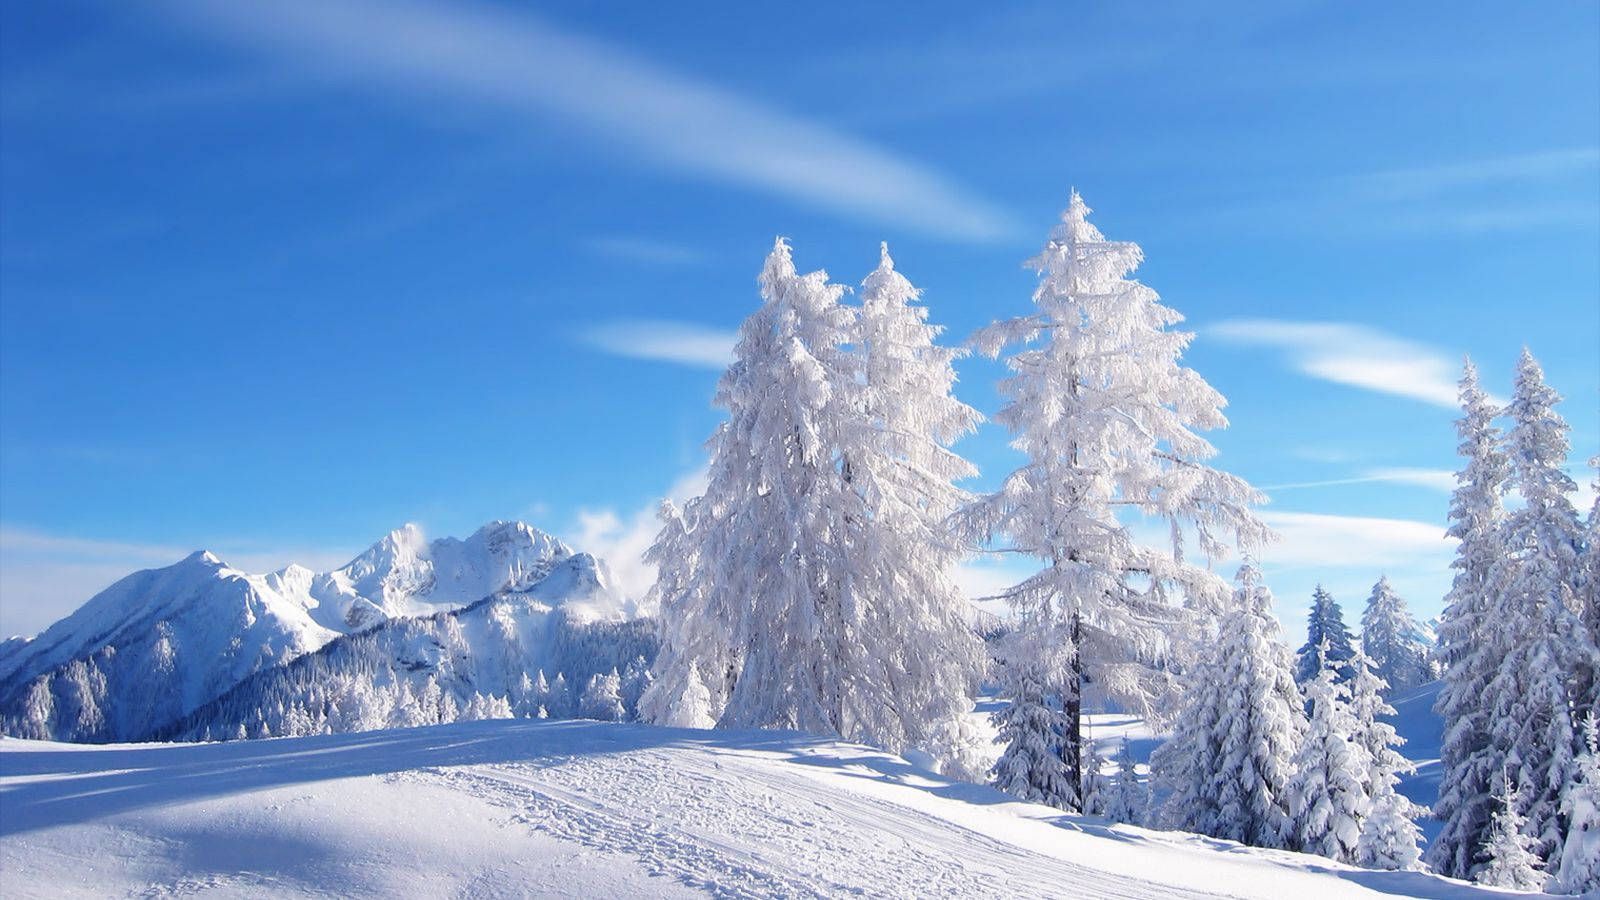 Enjoy the enchanting beauty of winter with Snow Desktop. Wallpaper